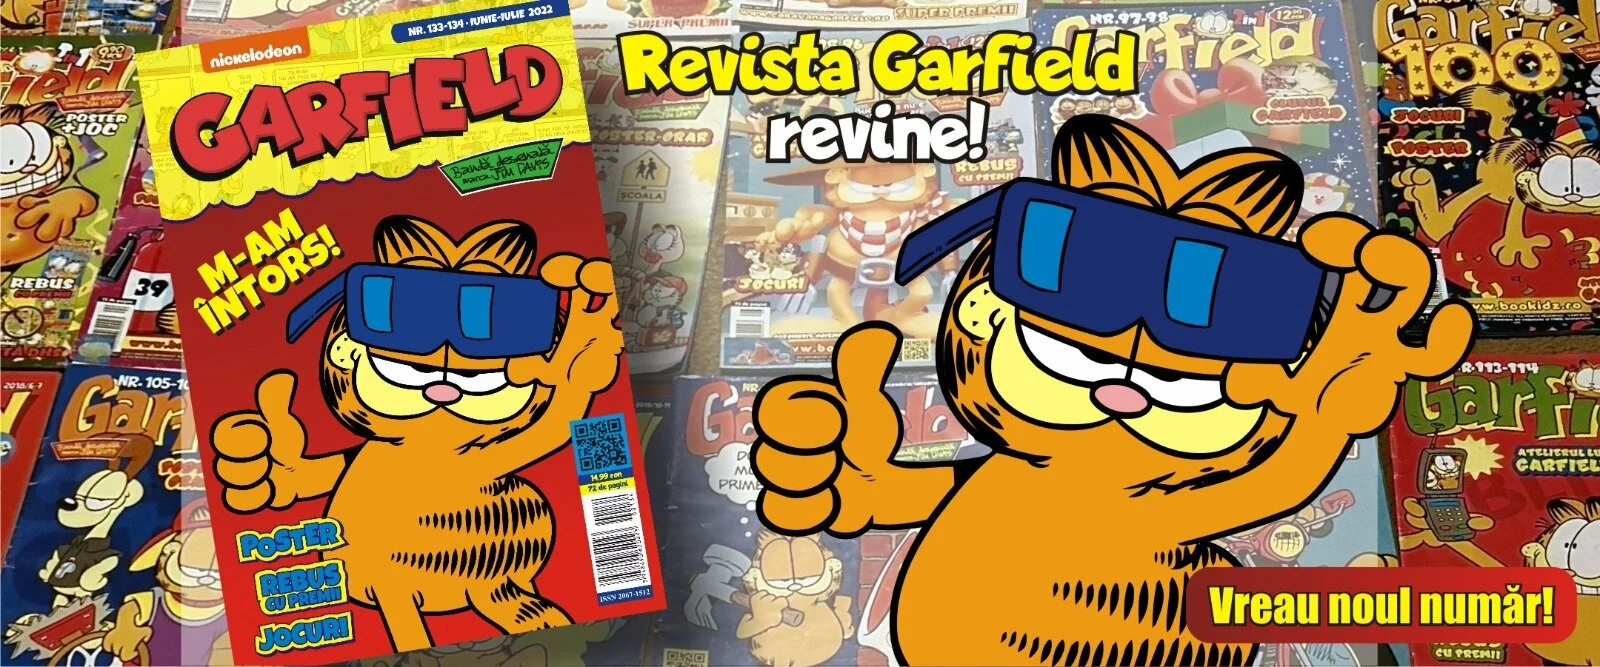 Revista Garfield